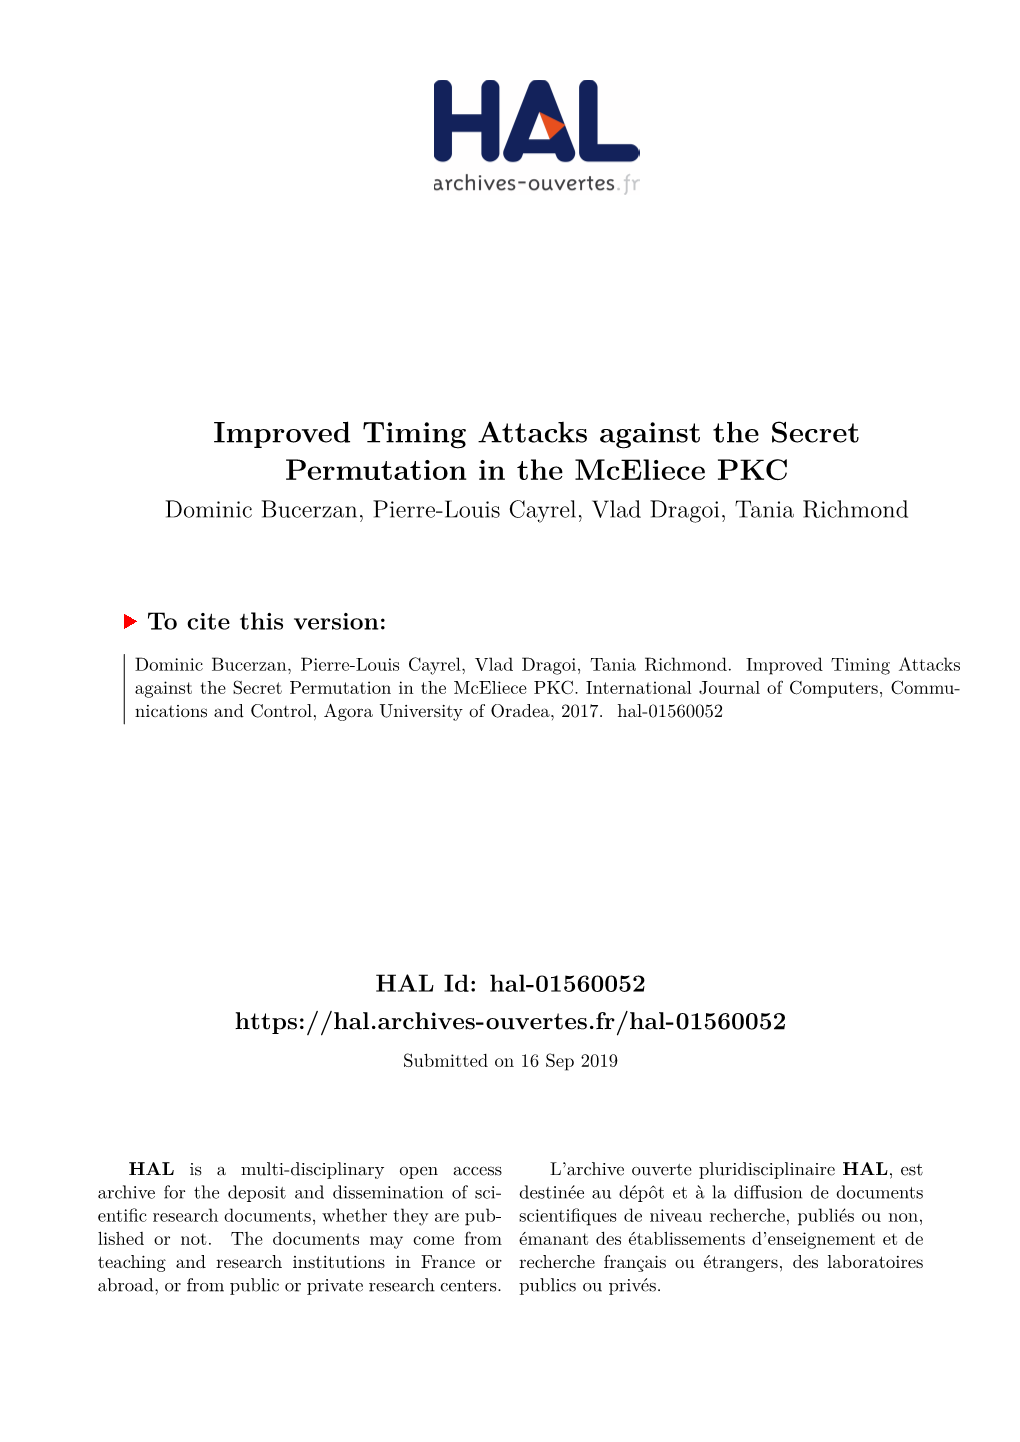 Improved Timing Attacks Against the Secret Permutation in the Mceliece PKC Dominic Bucerzan, Pierre-Louis Cayrel, Vlad Dragoi, Tania Richmond